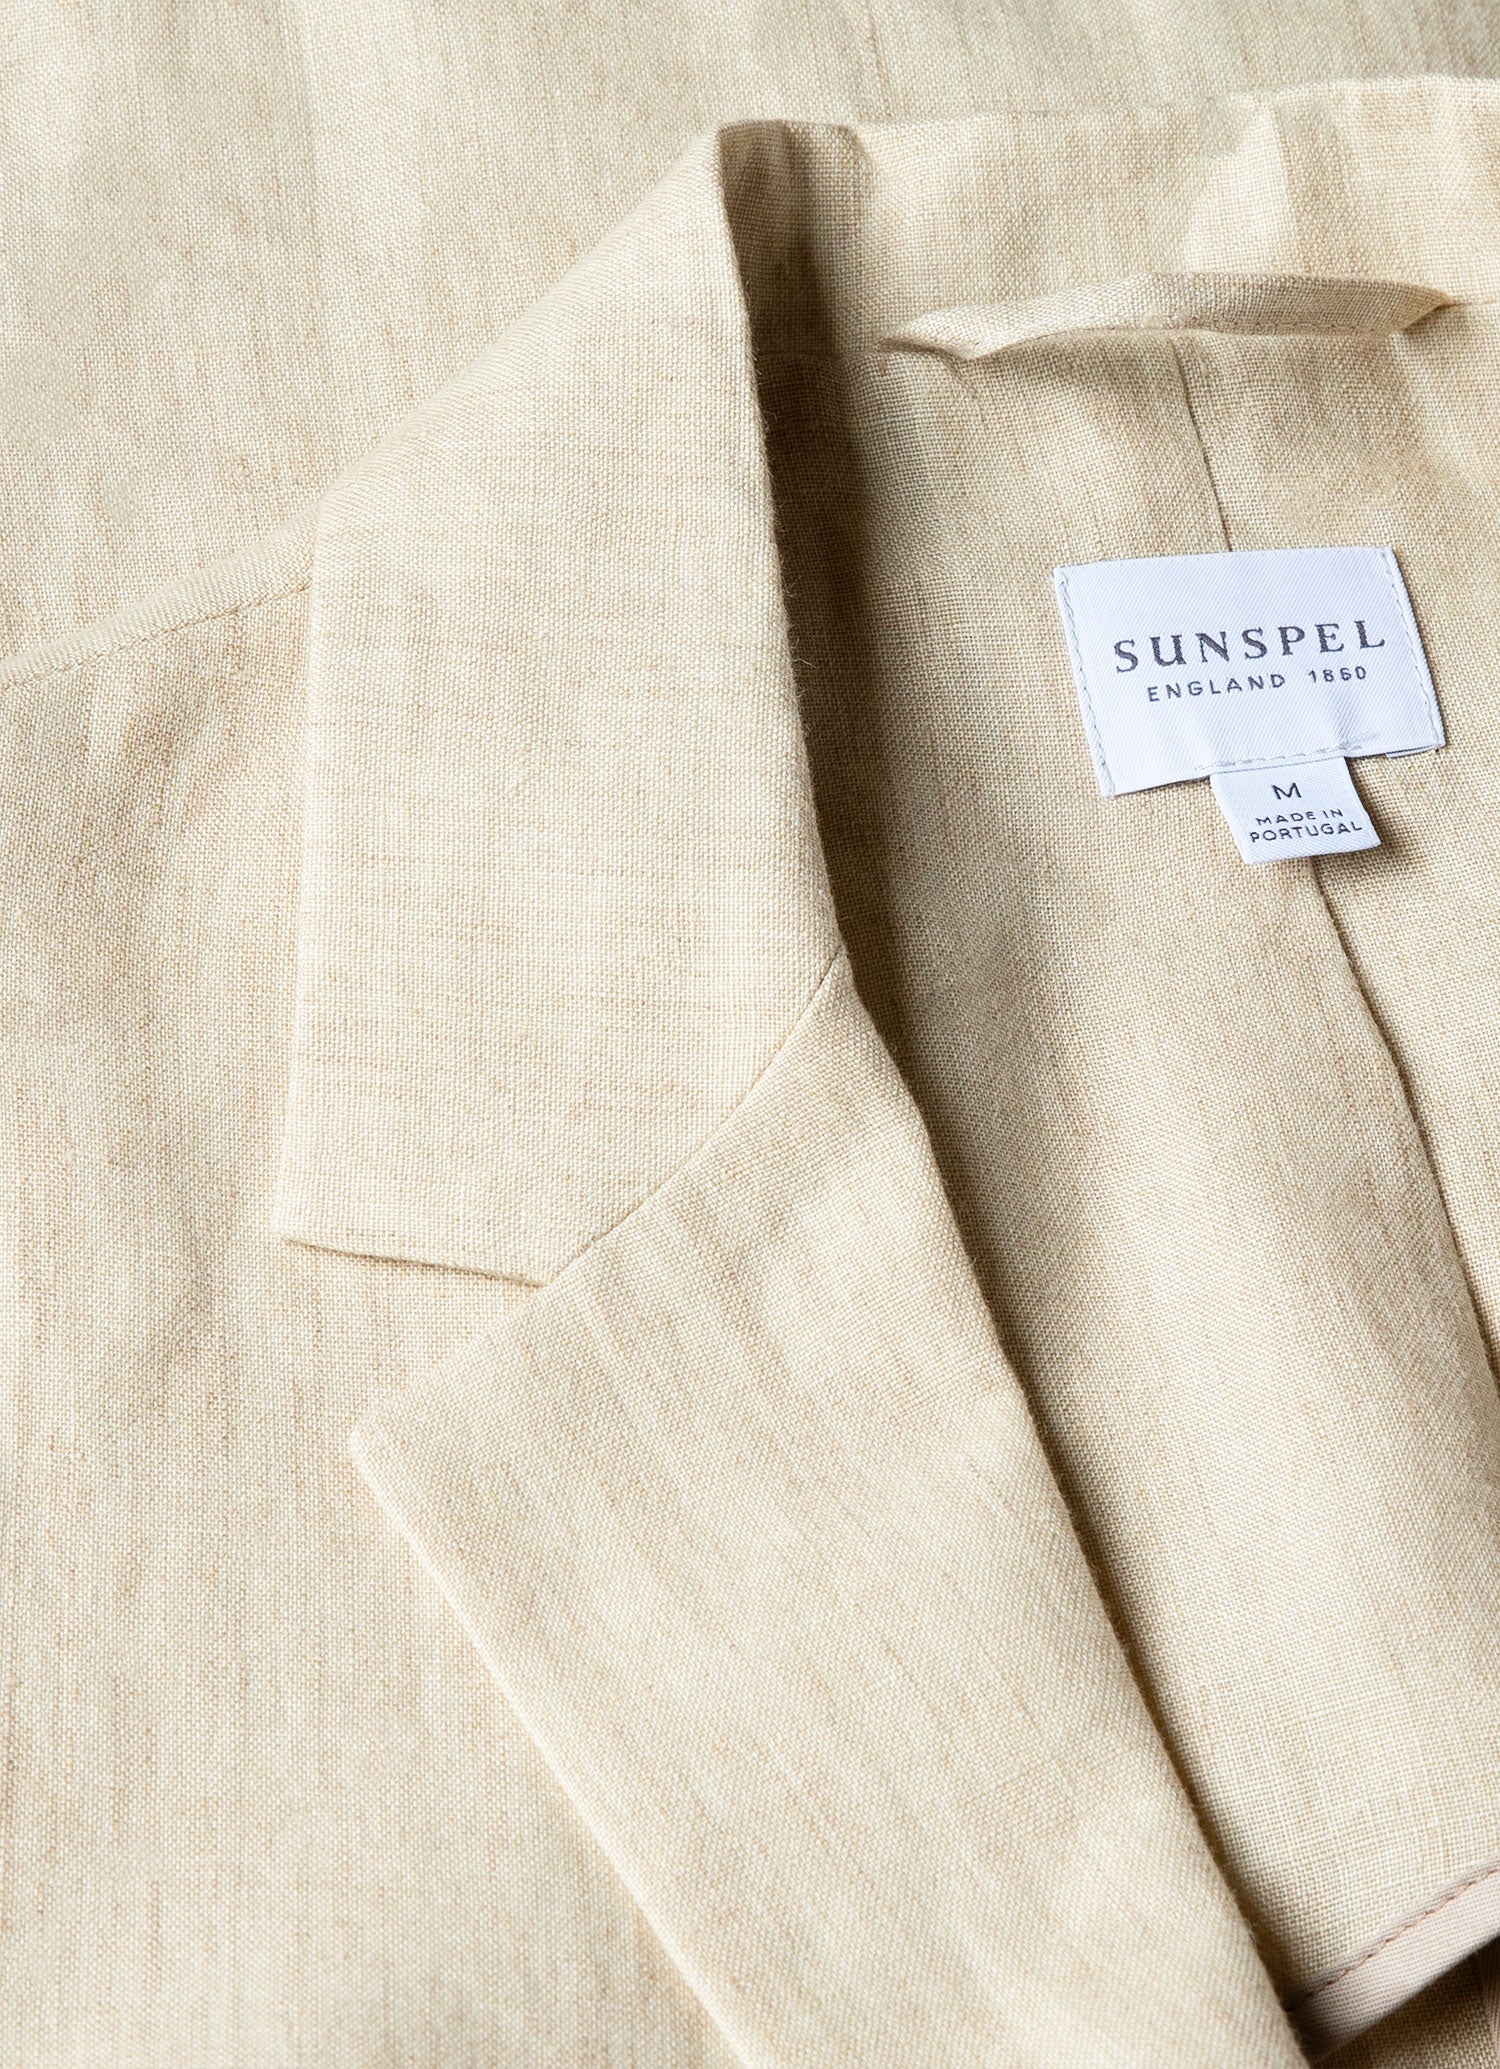 Men's Linen Two-Piece Suit in Light Sand